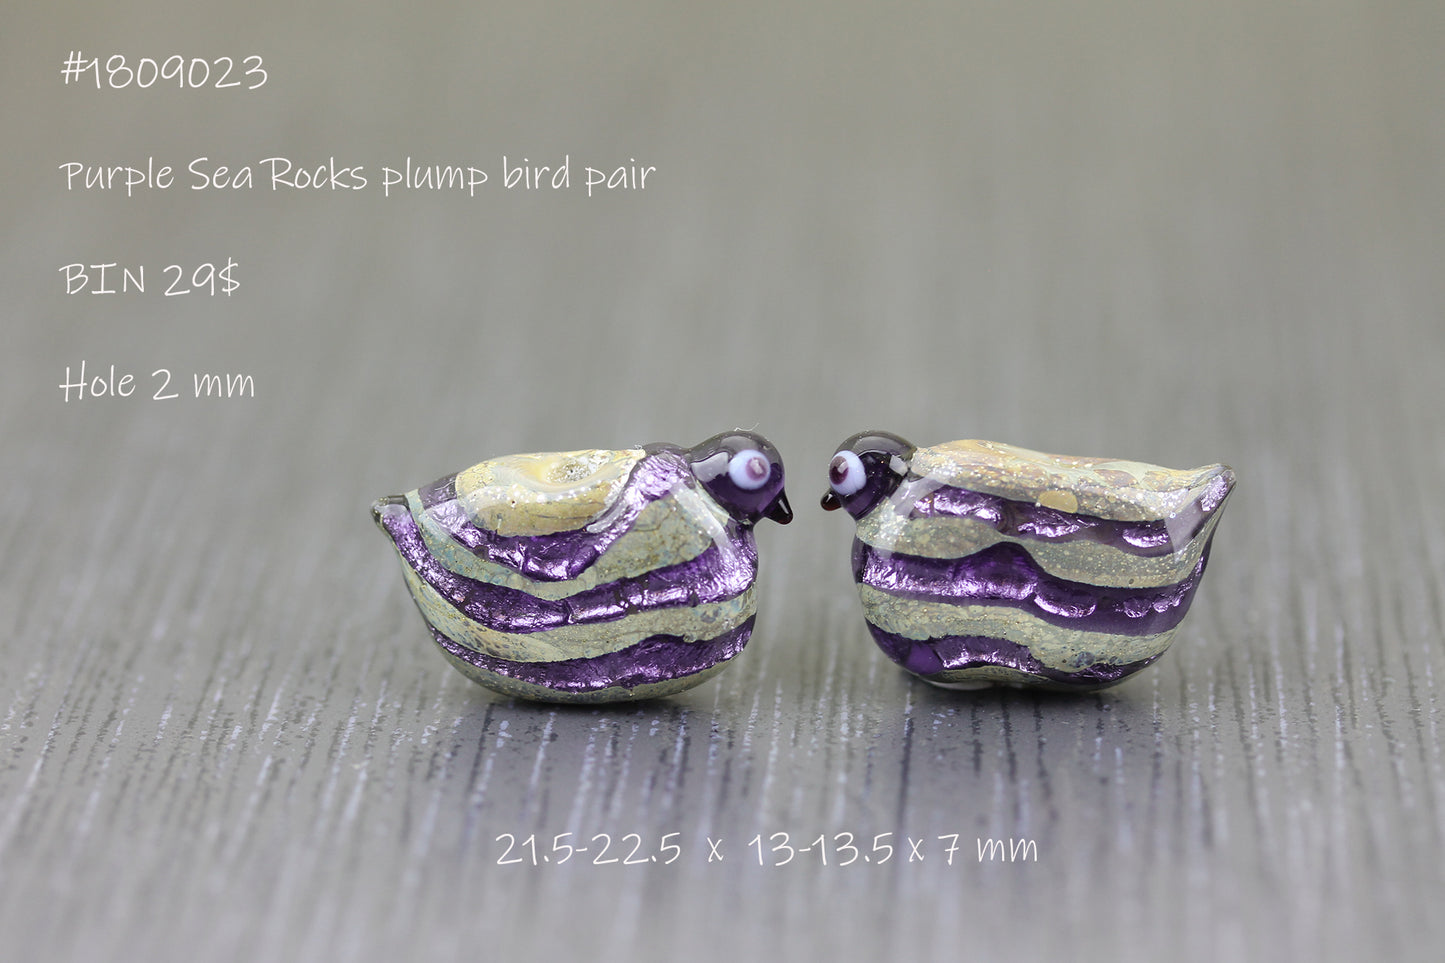 #1809023 - Pale purple Sea Rocks birdies